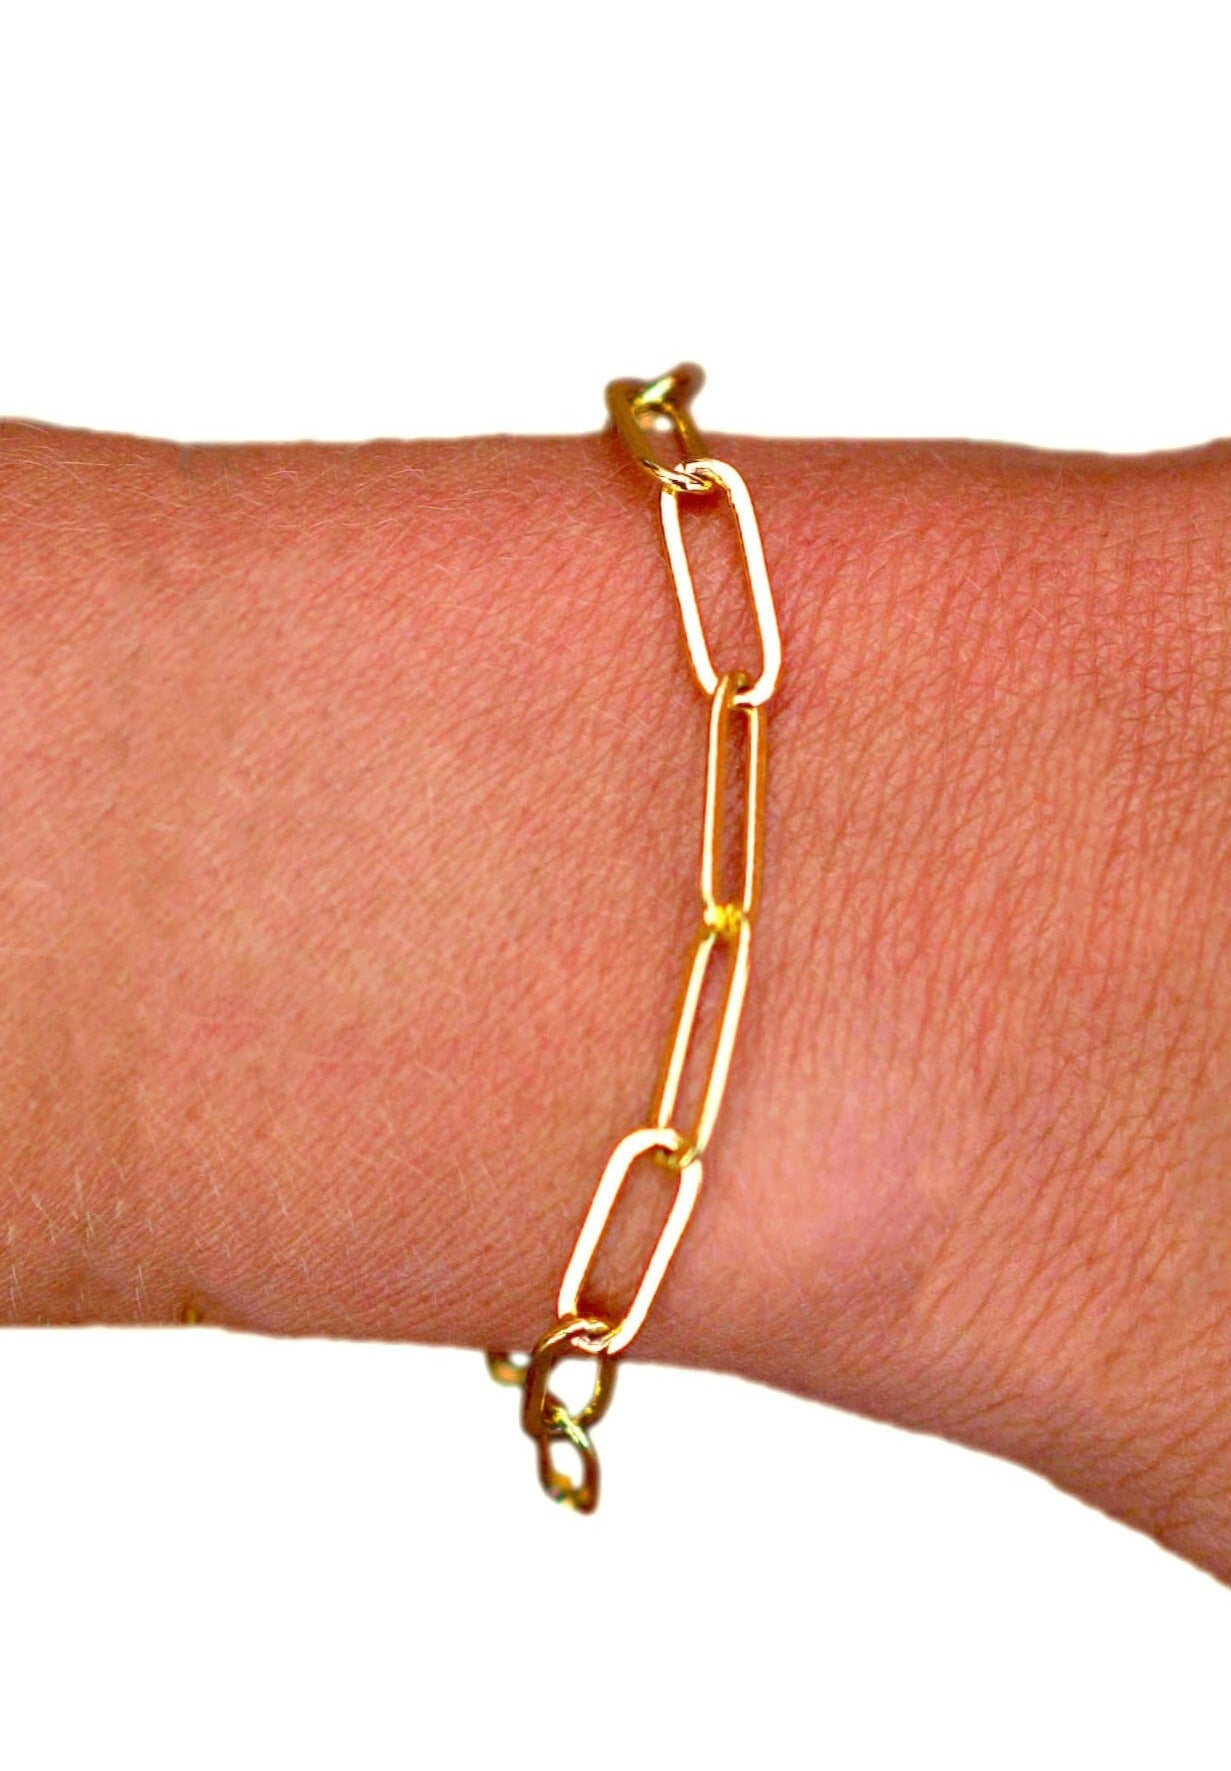 24k gold plated / Dubai gold bracelet. – Bawaries